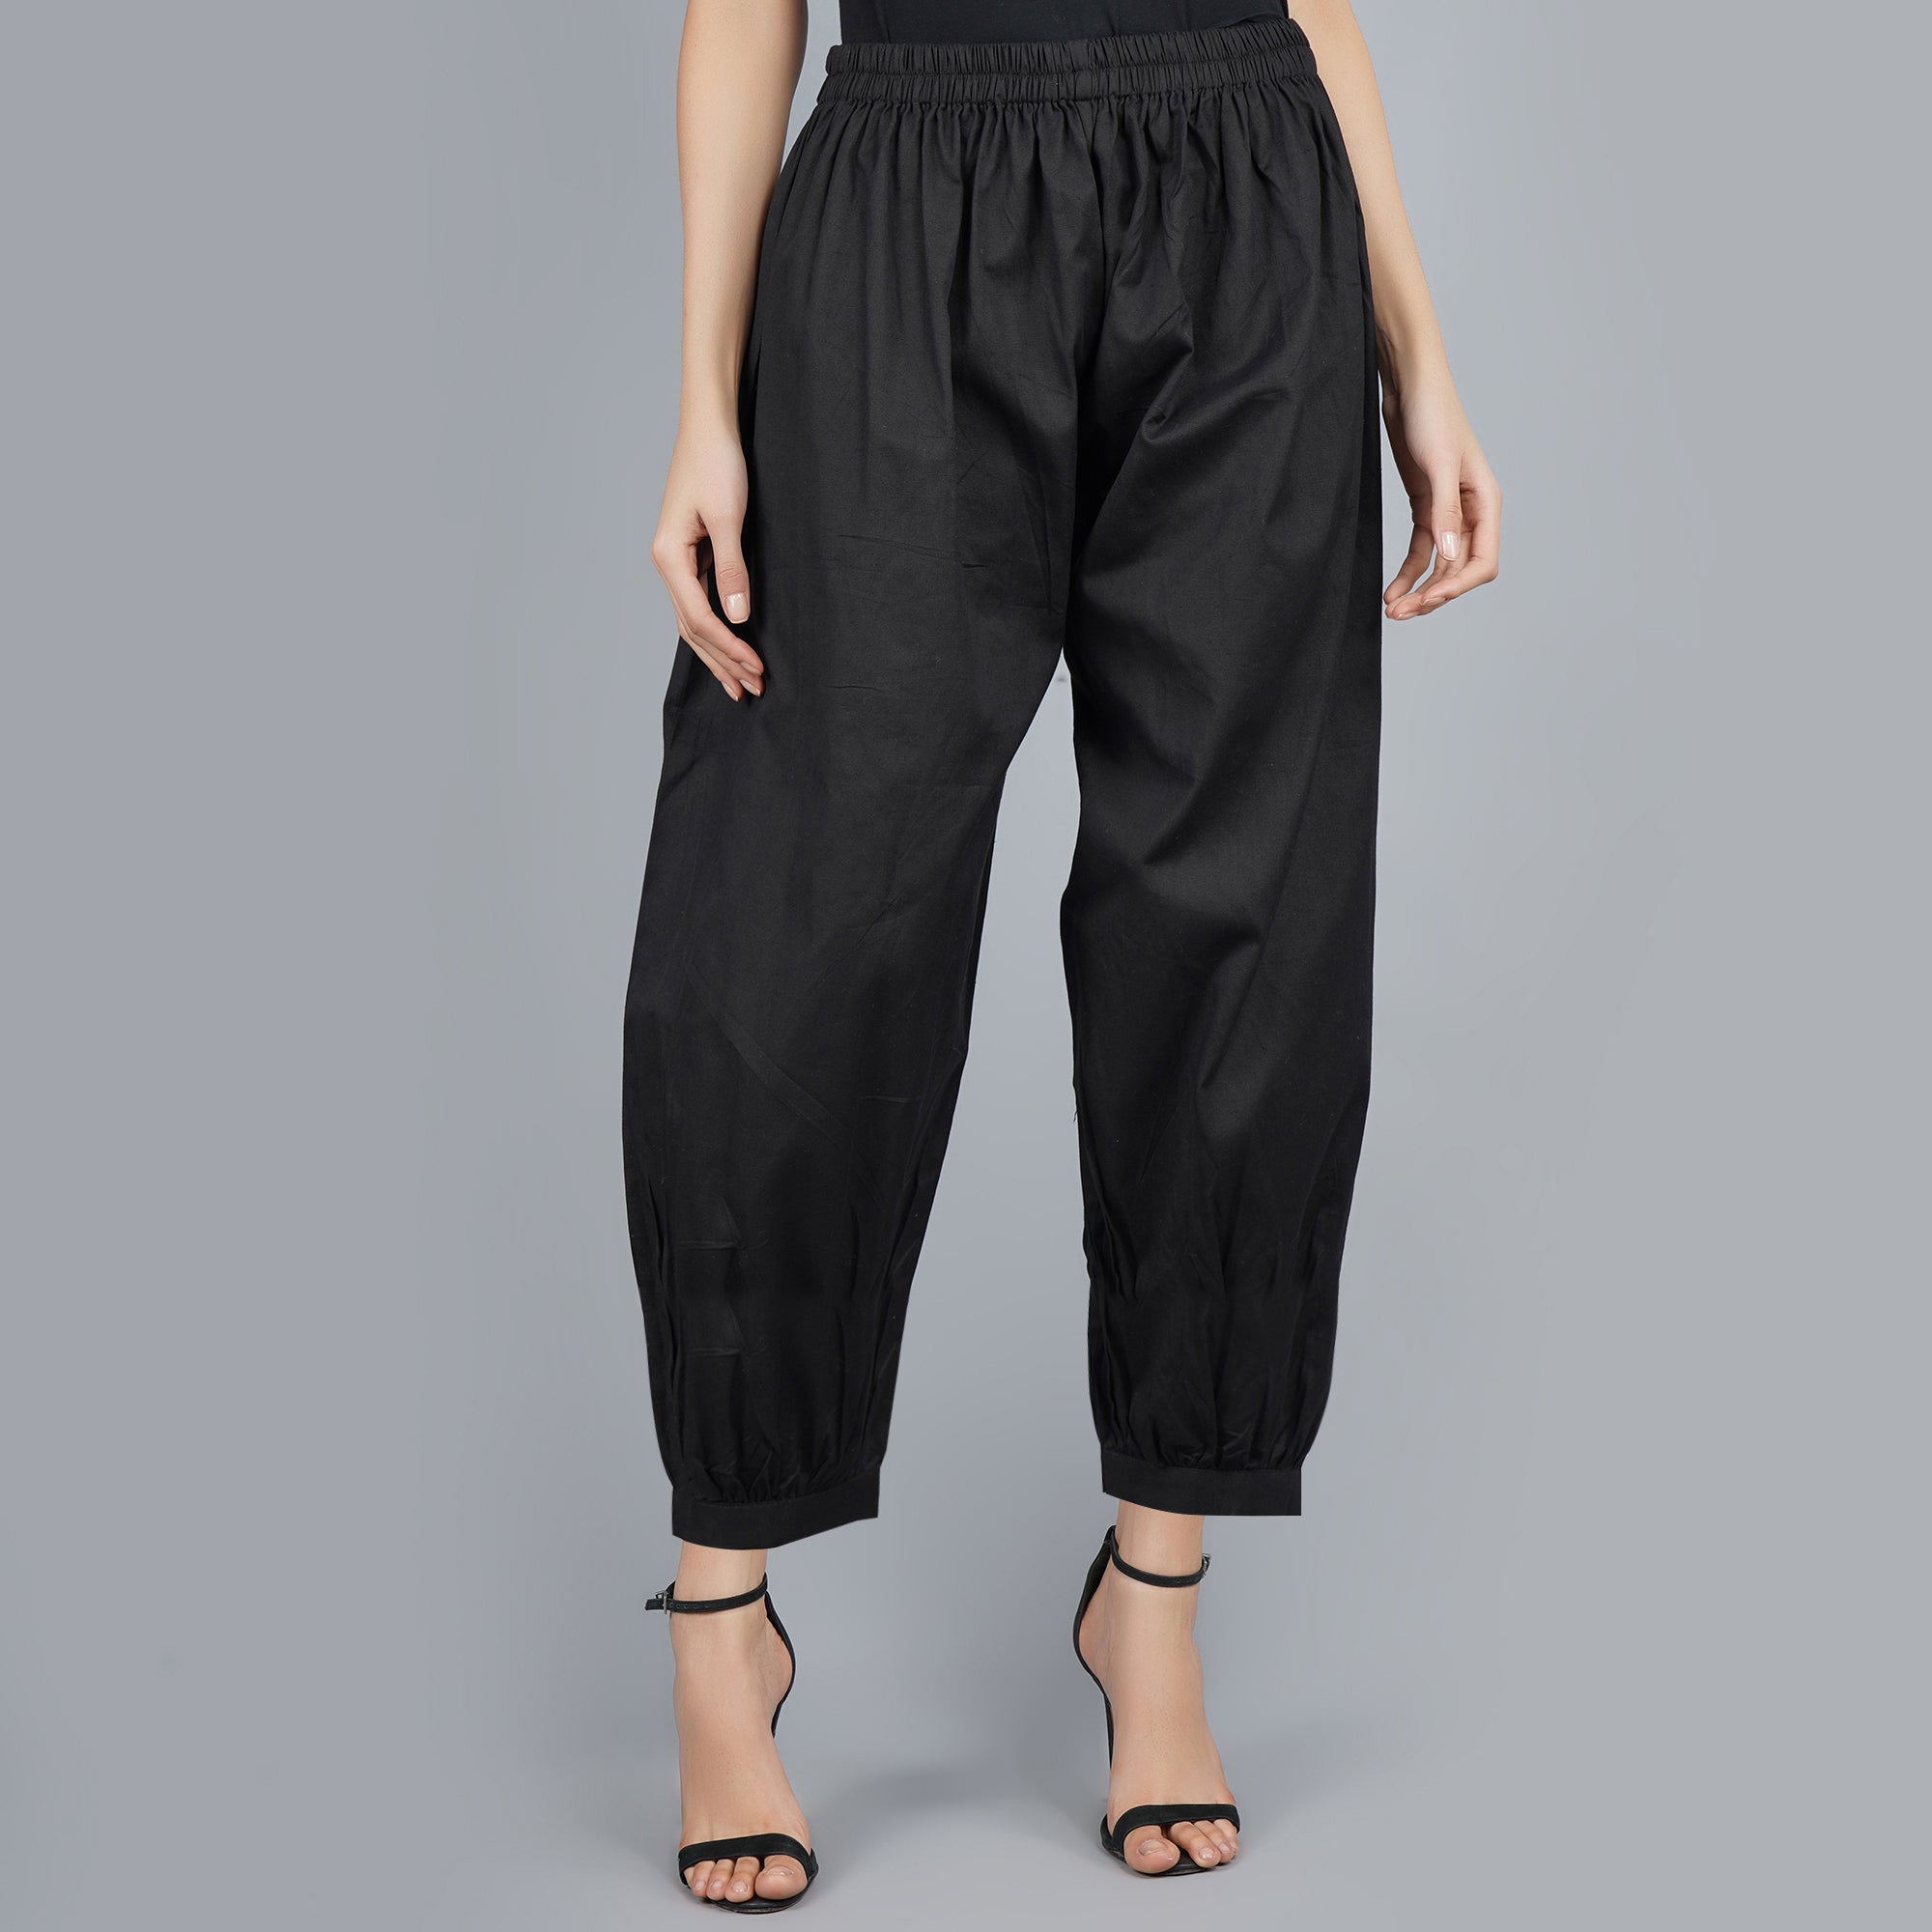 Unisex Men's and Women's Cotton Aladdin Harem Pajama Pants, Size: Free Size